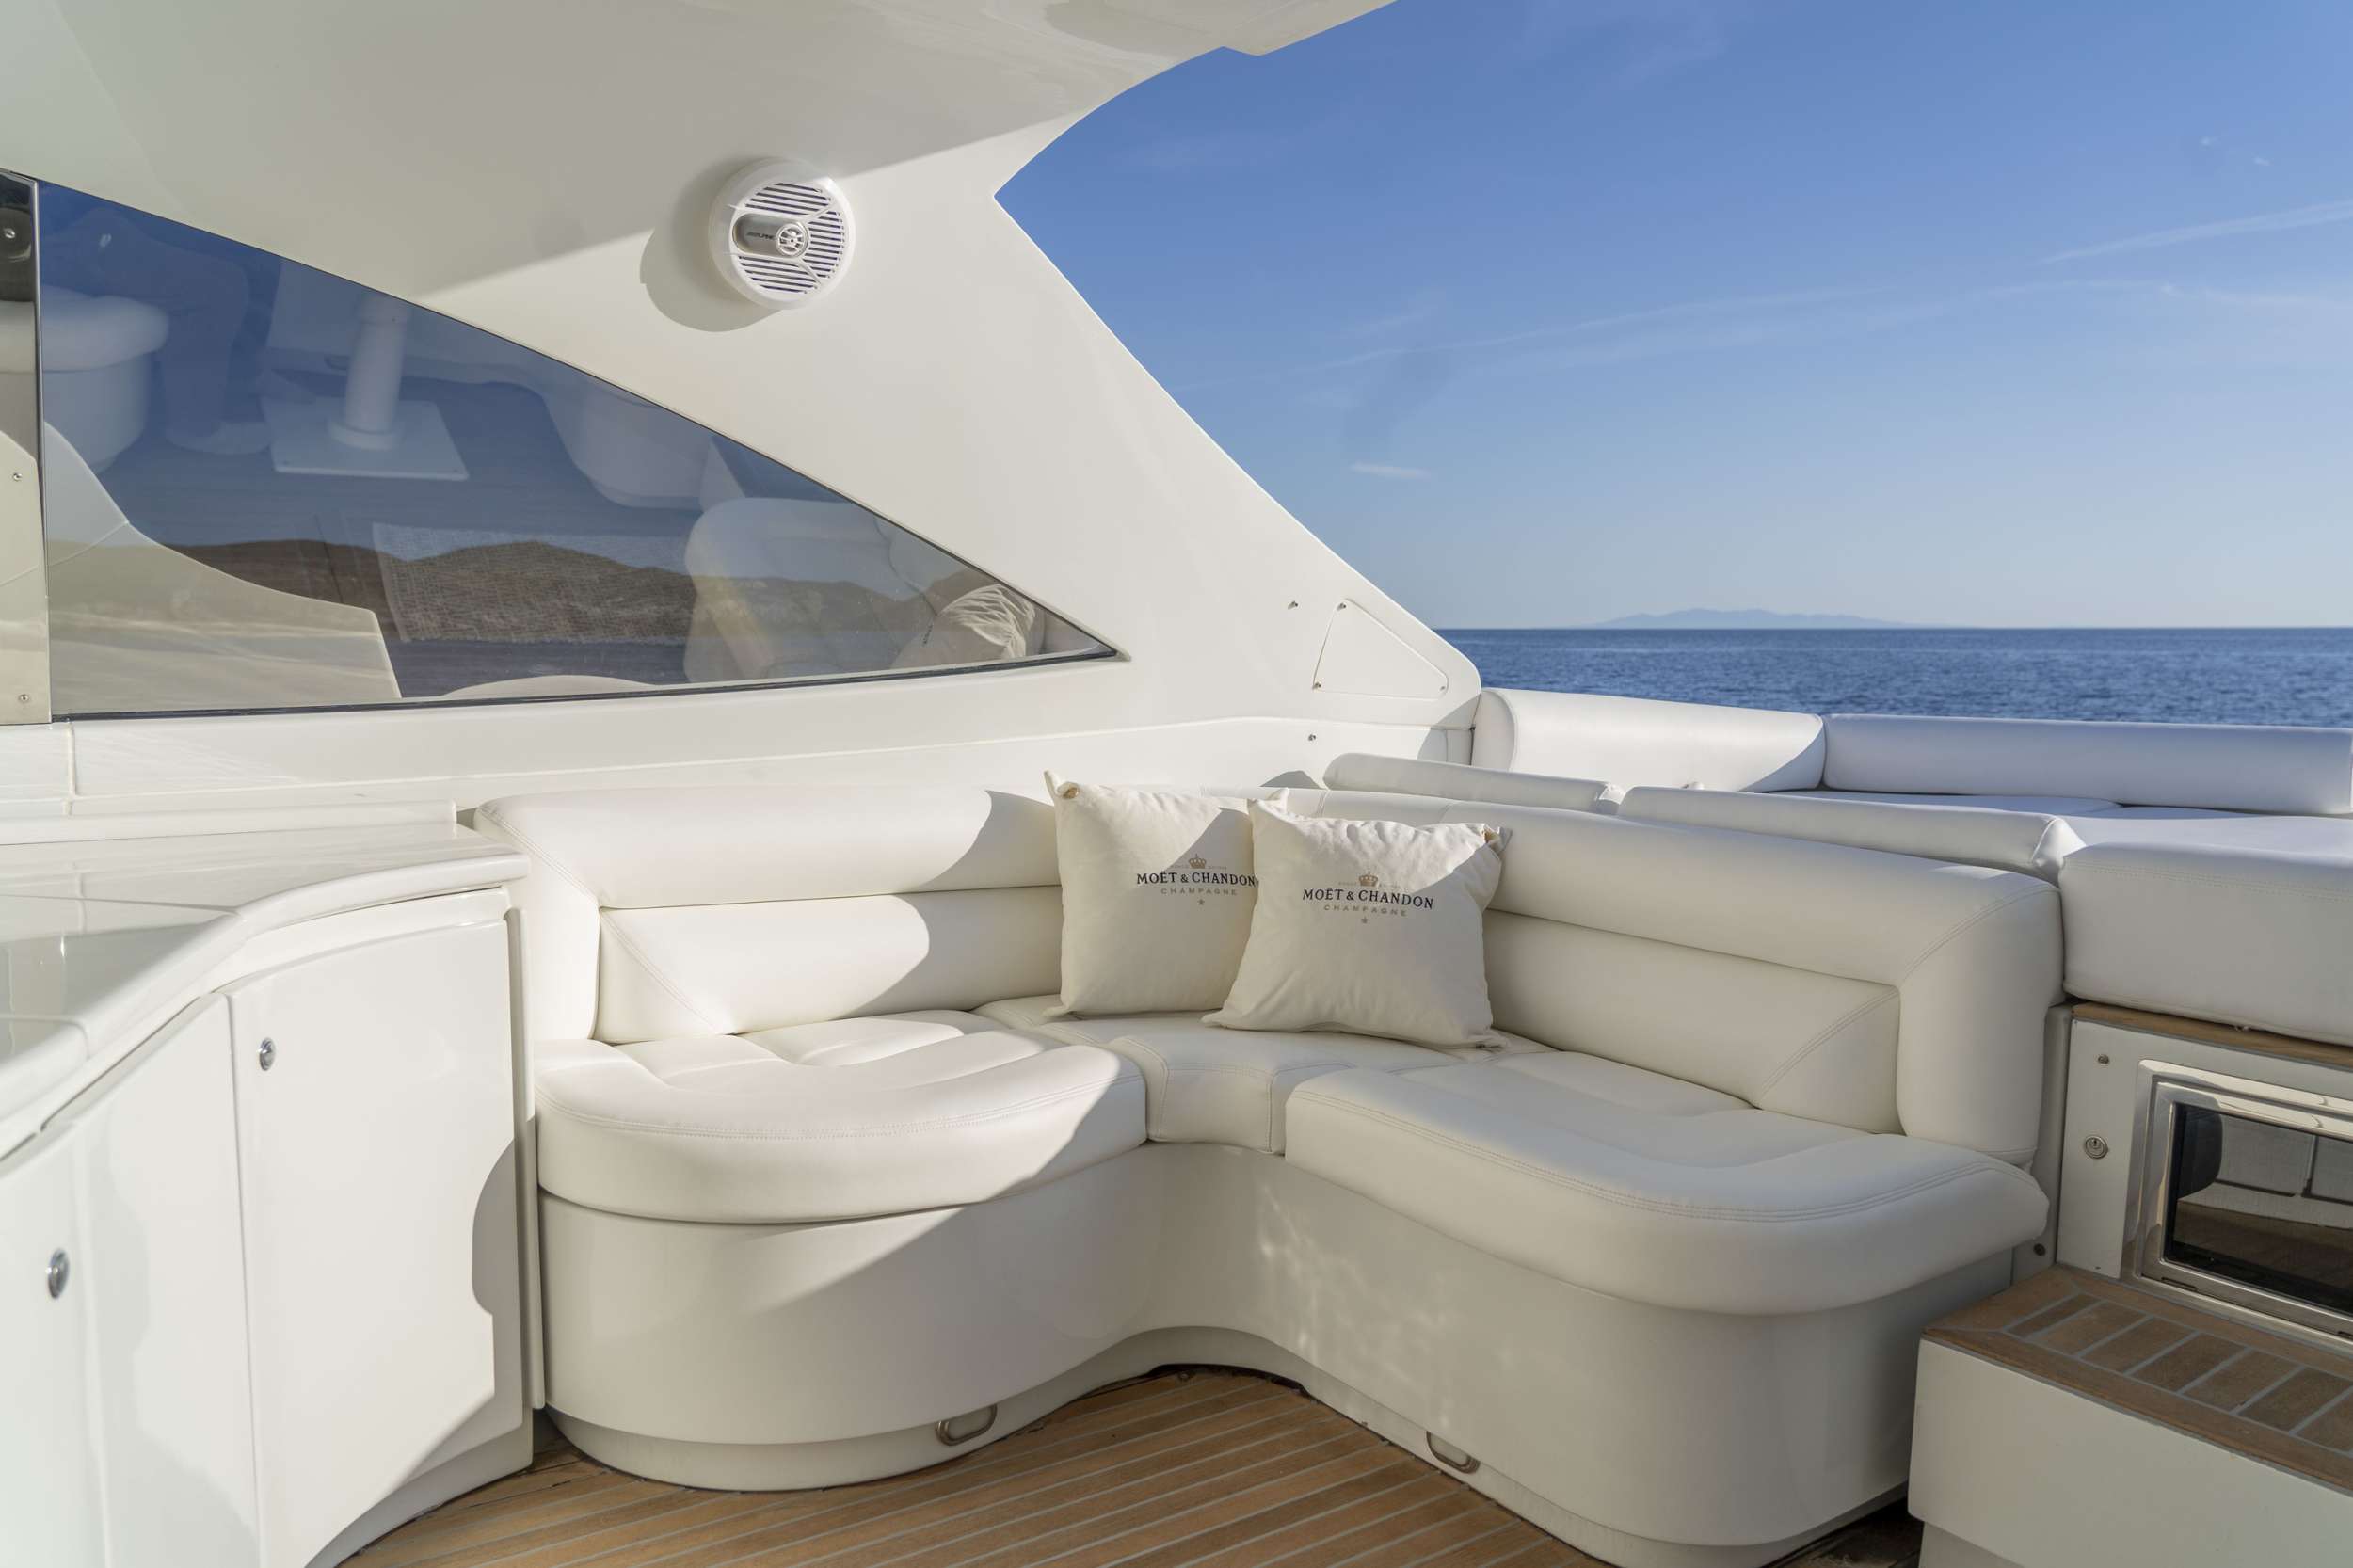 LAKOUPETI Yacht Charter - Aft deck salon